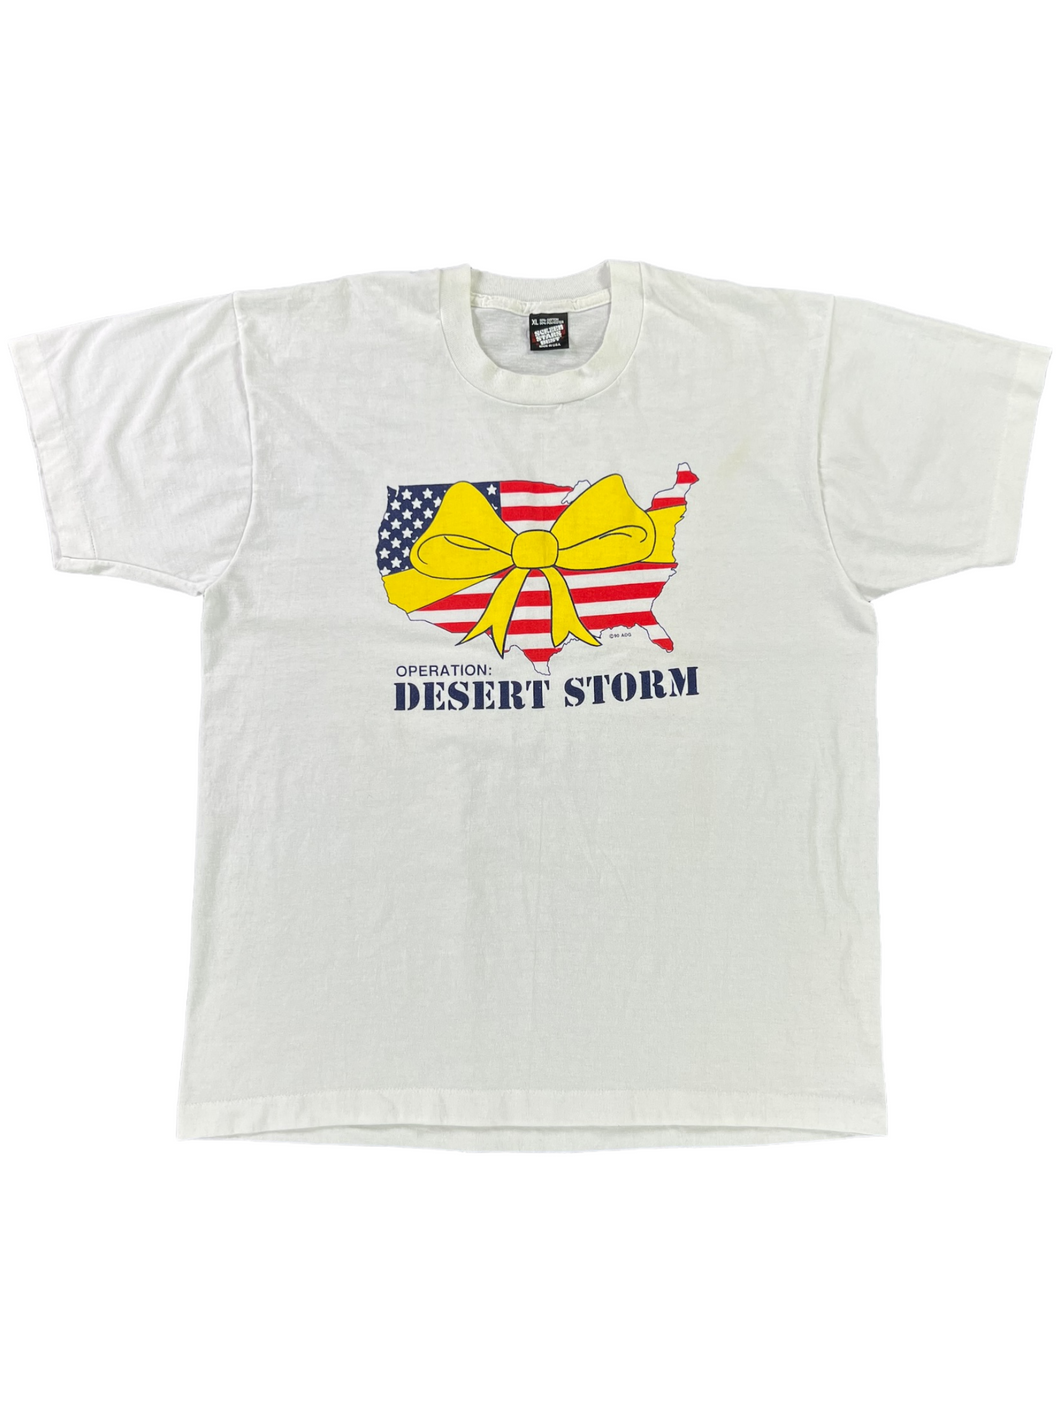 Vintage 1990 American flag operation: desert storm tee (XL)